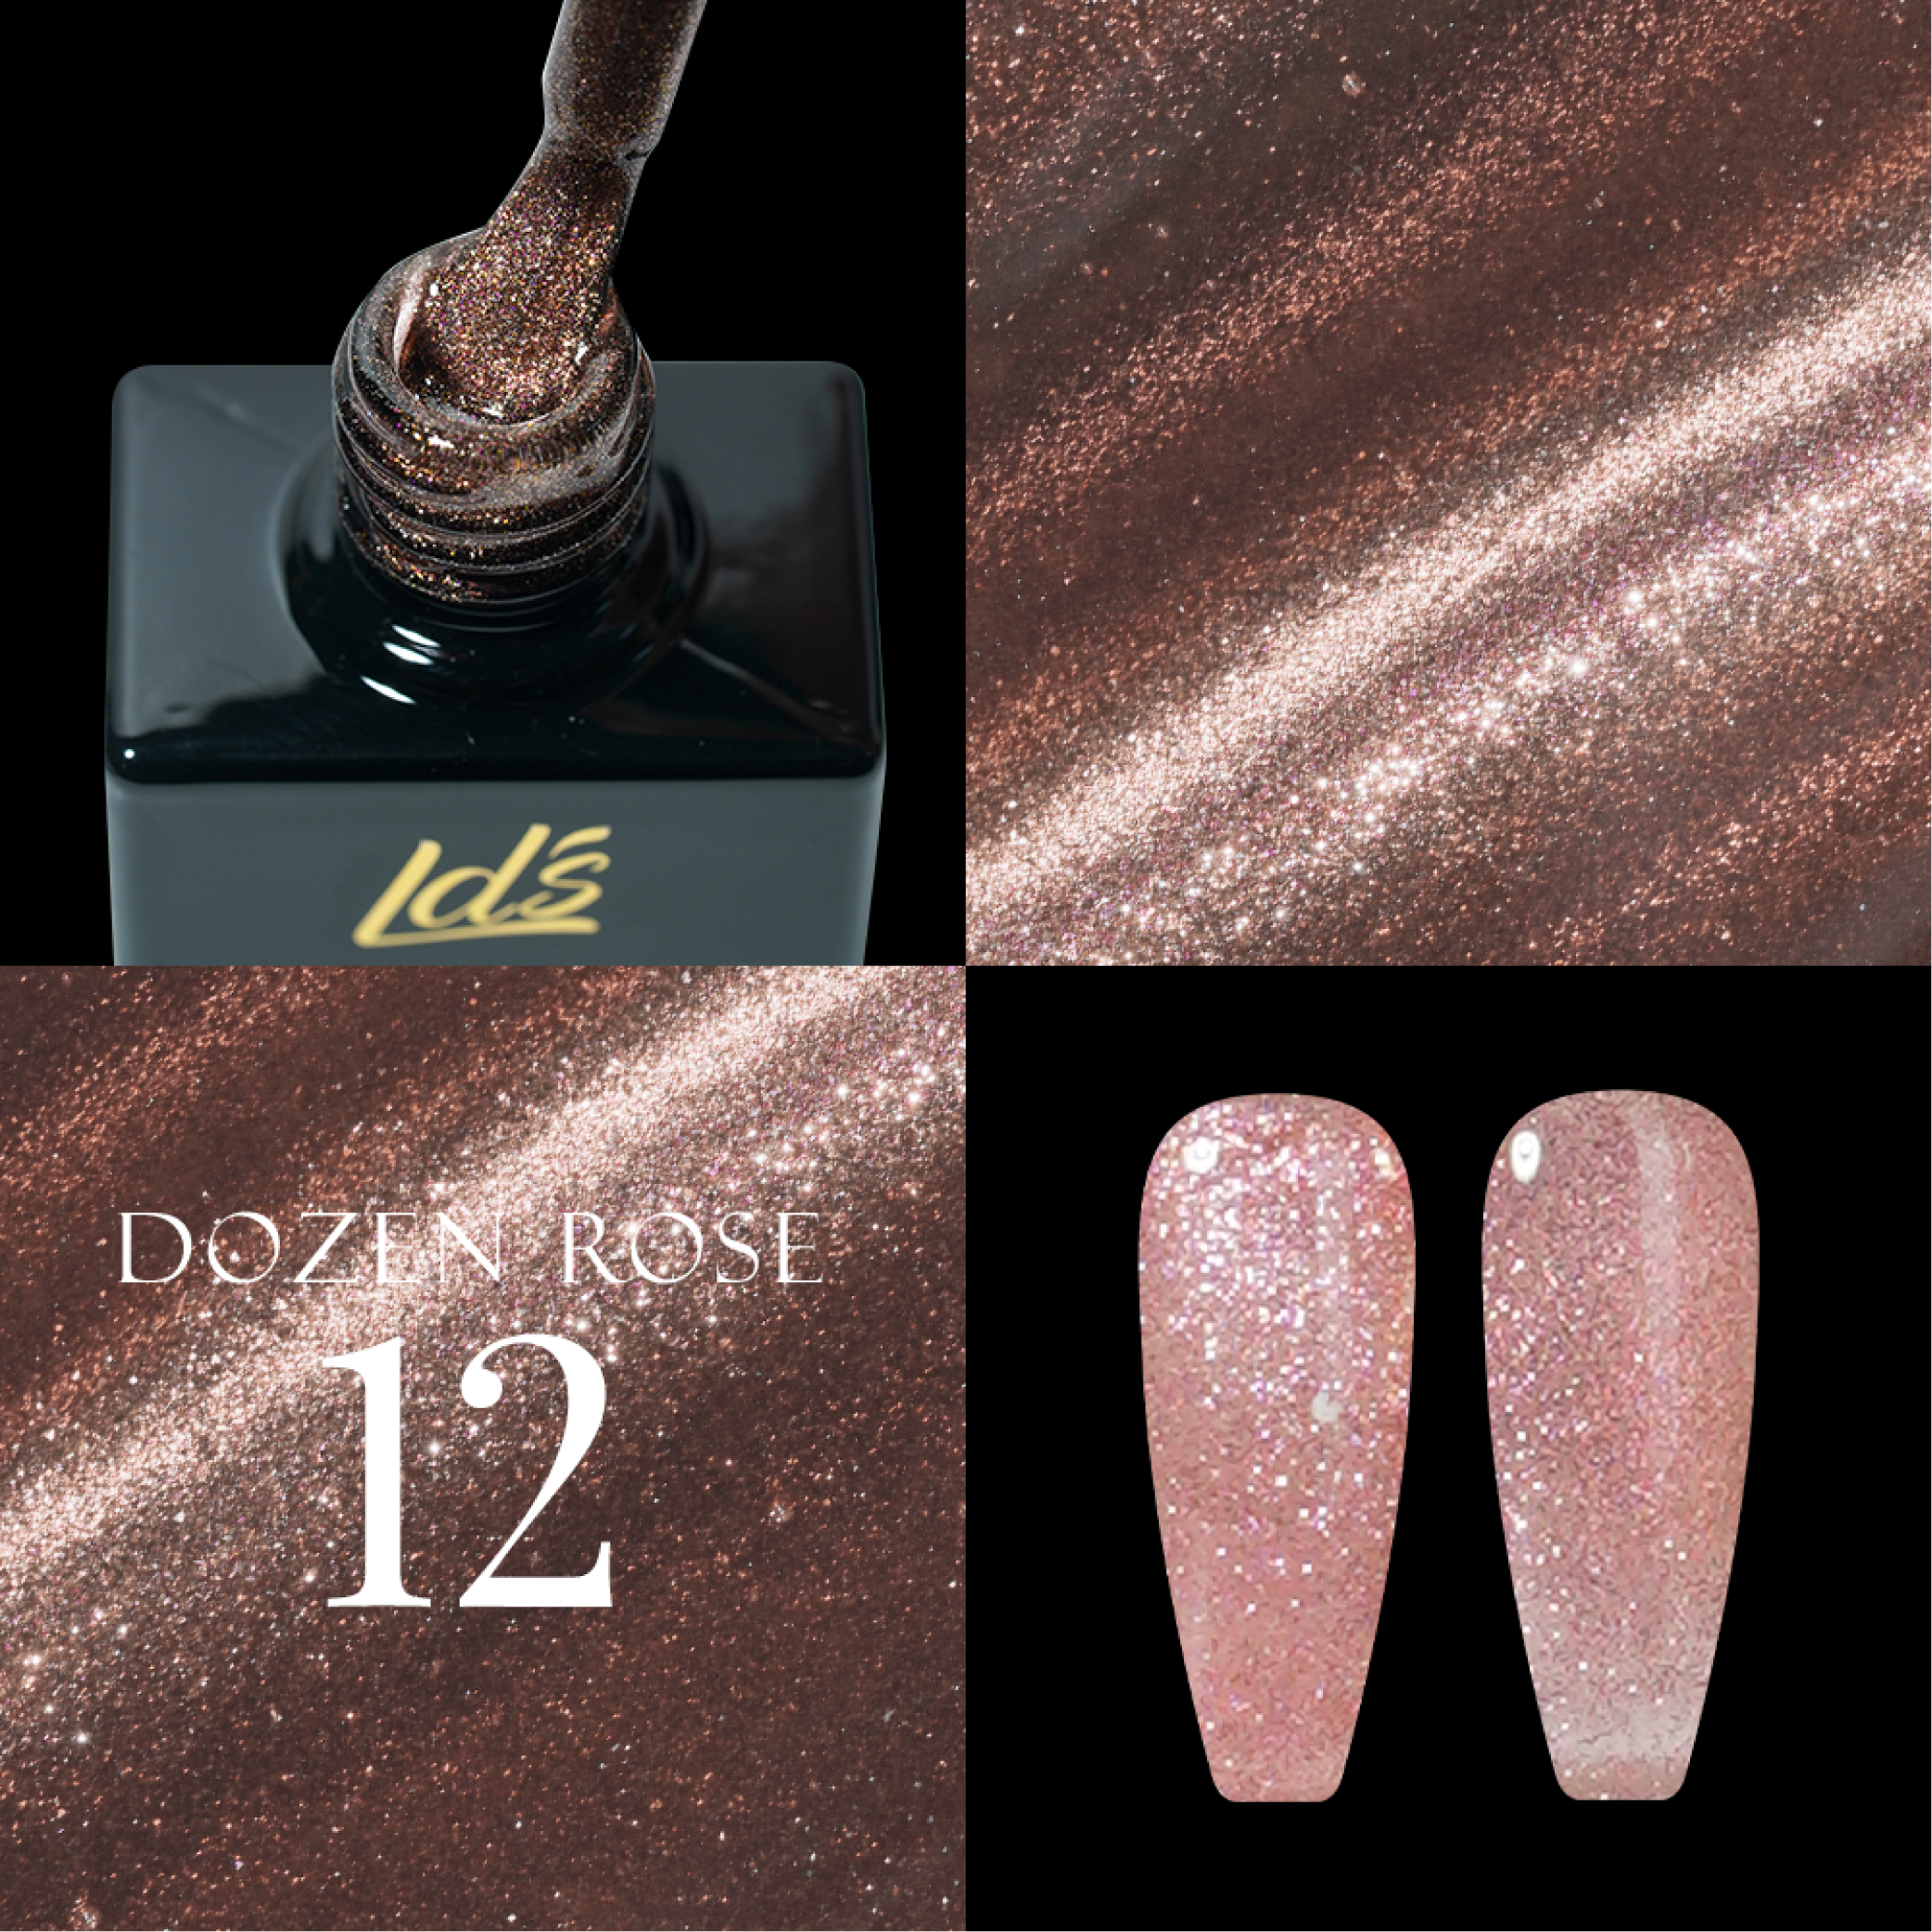 LDS DR12 - Gel Polish 0.5 oz - Dozen Rose Collection